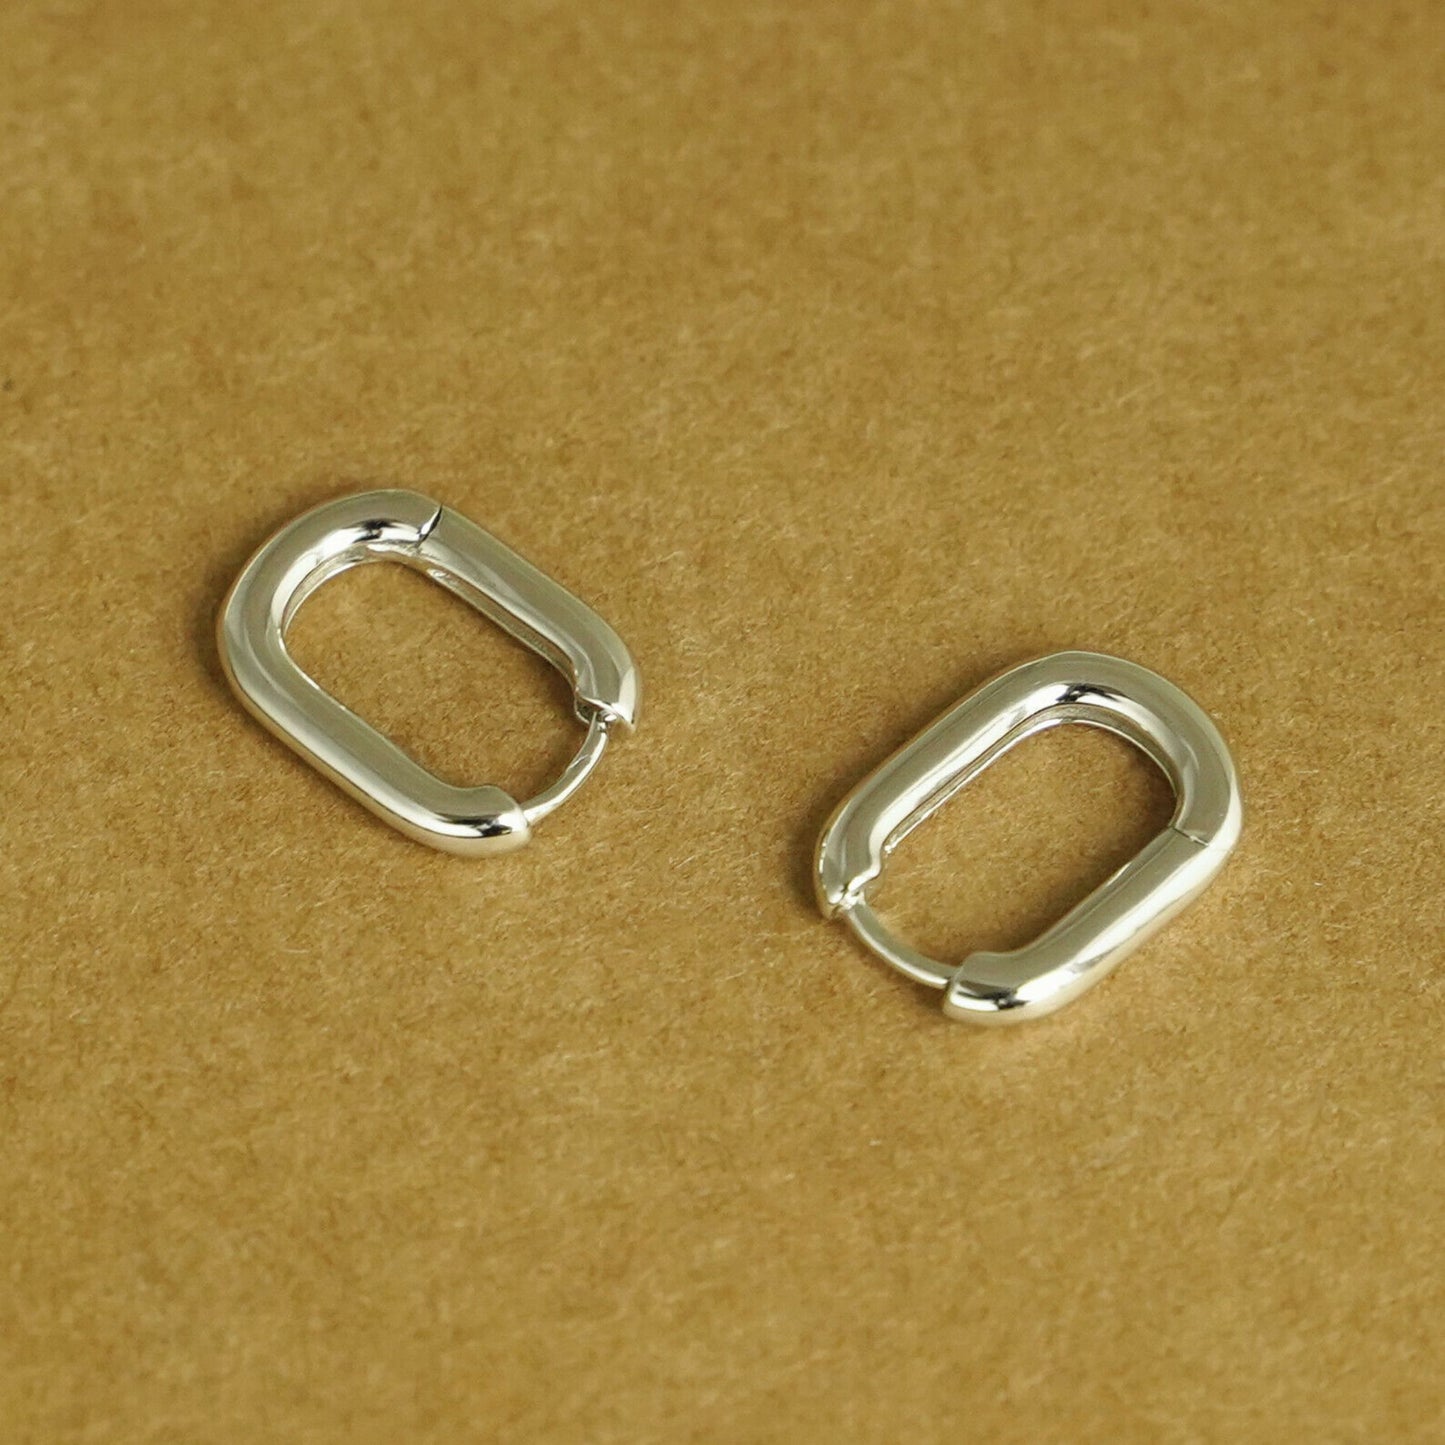 Rhodium on Sterling Silver Plain Oval Square Hoop Earrings (14mm)